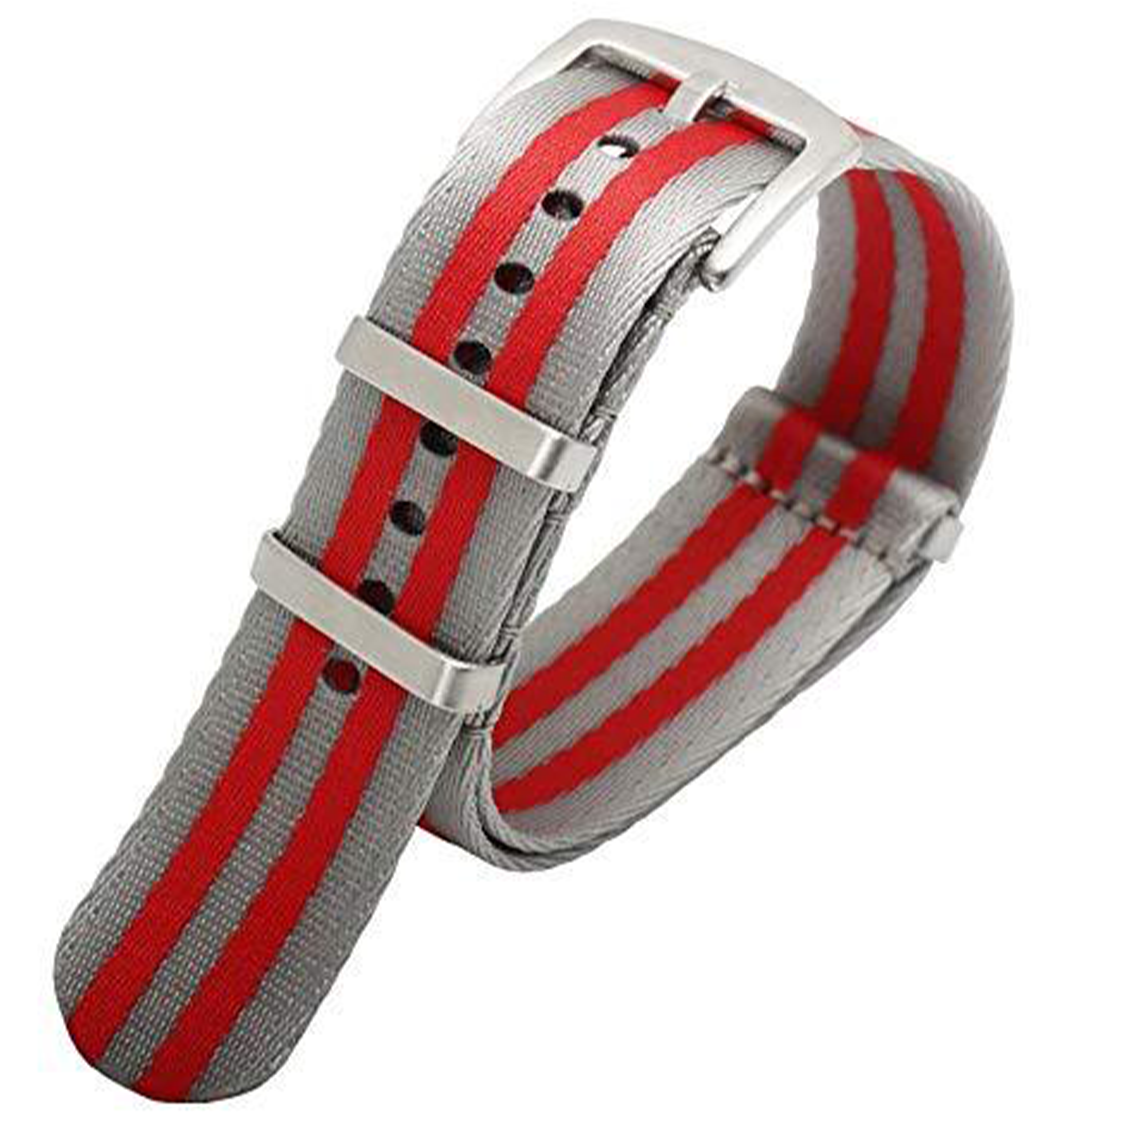 Seatbelt Ballistic Nylon NATO Watch Strap Grey with Red Stripe 